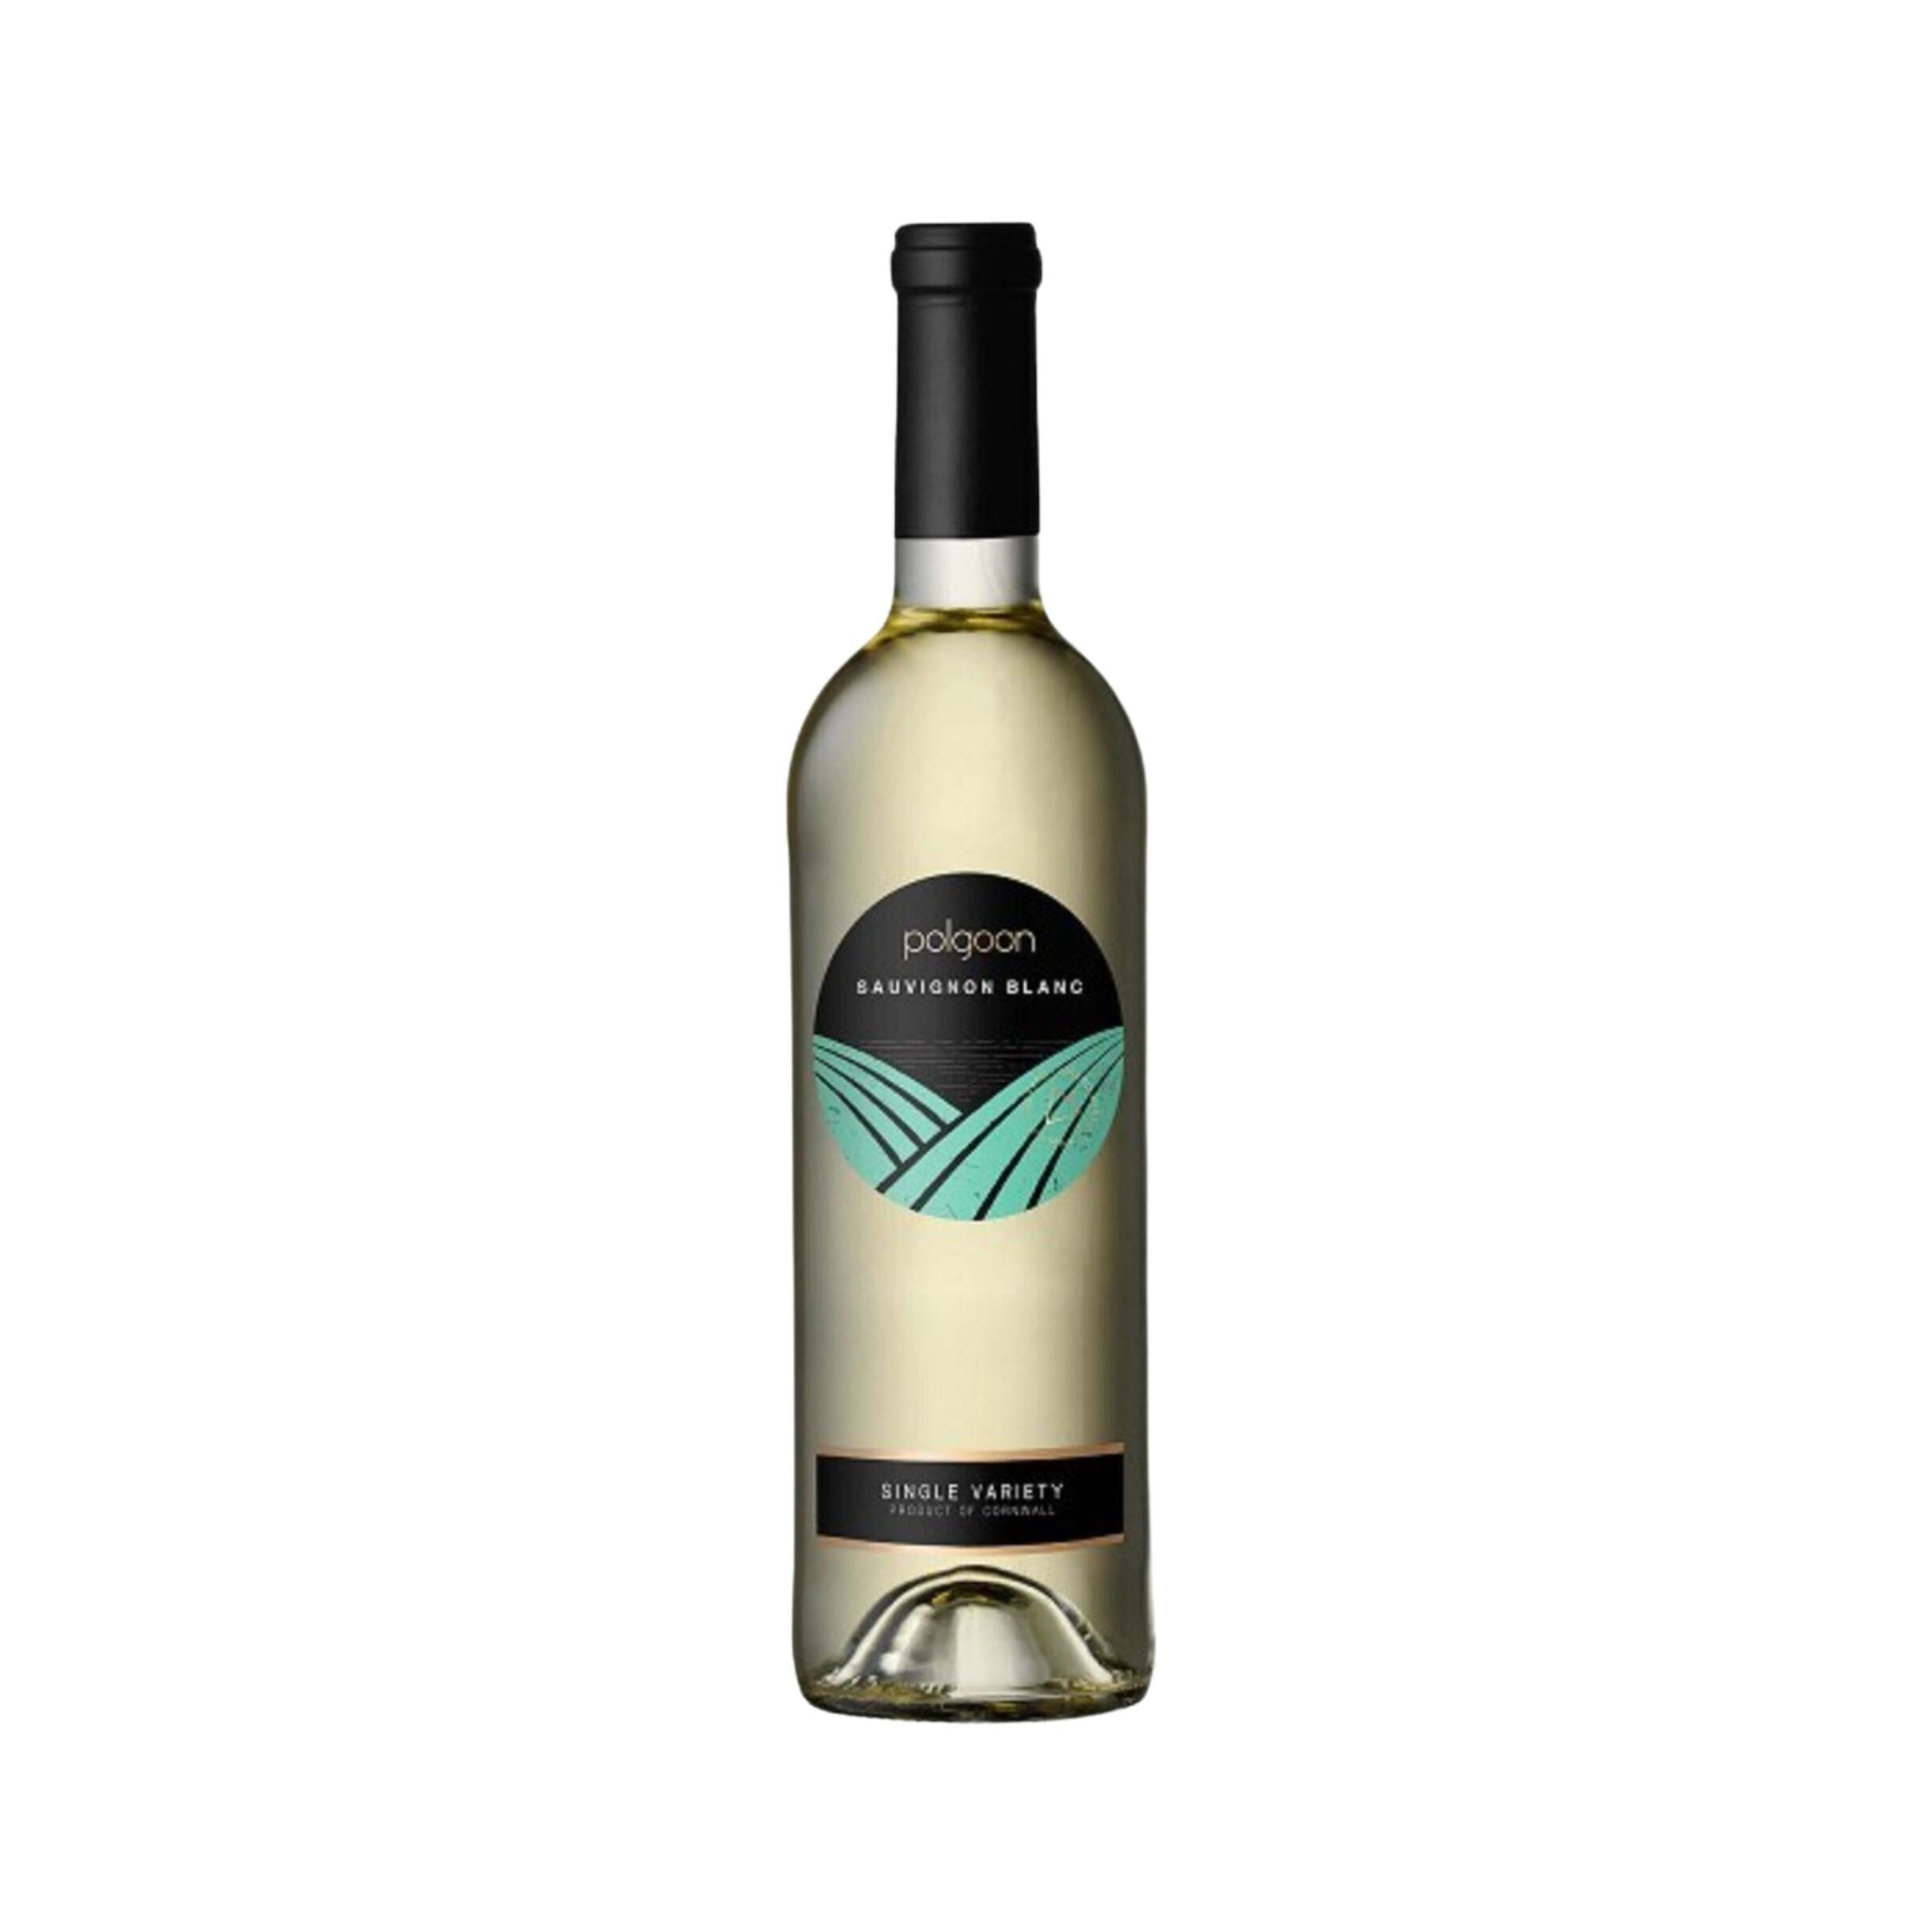 Polgoon Sauvignon Blanc The Online Wine Tasting Club 